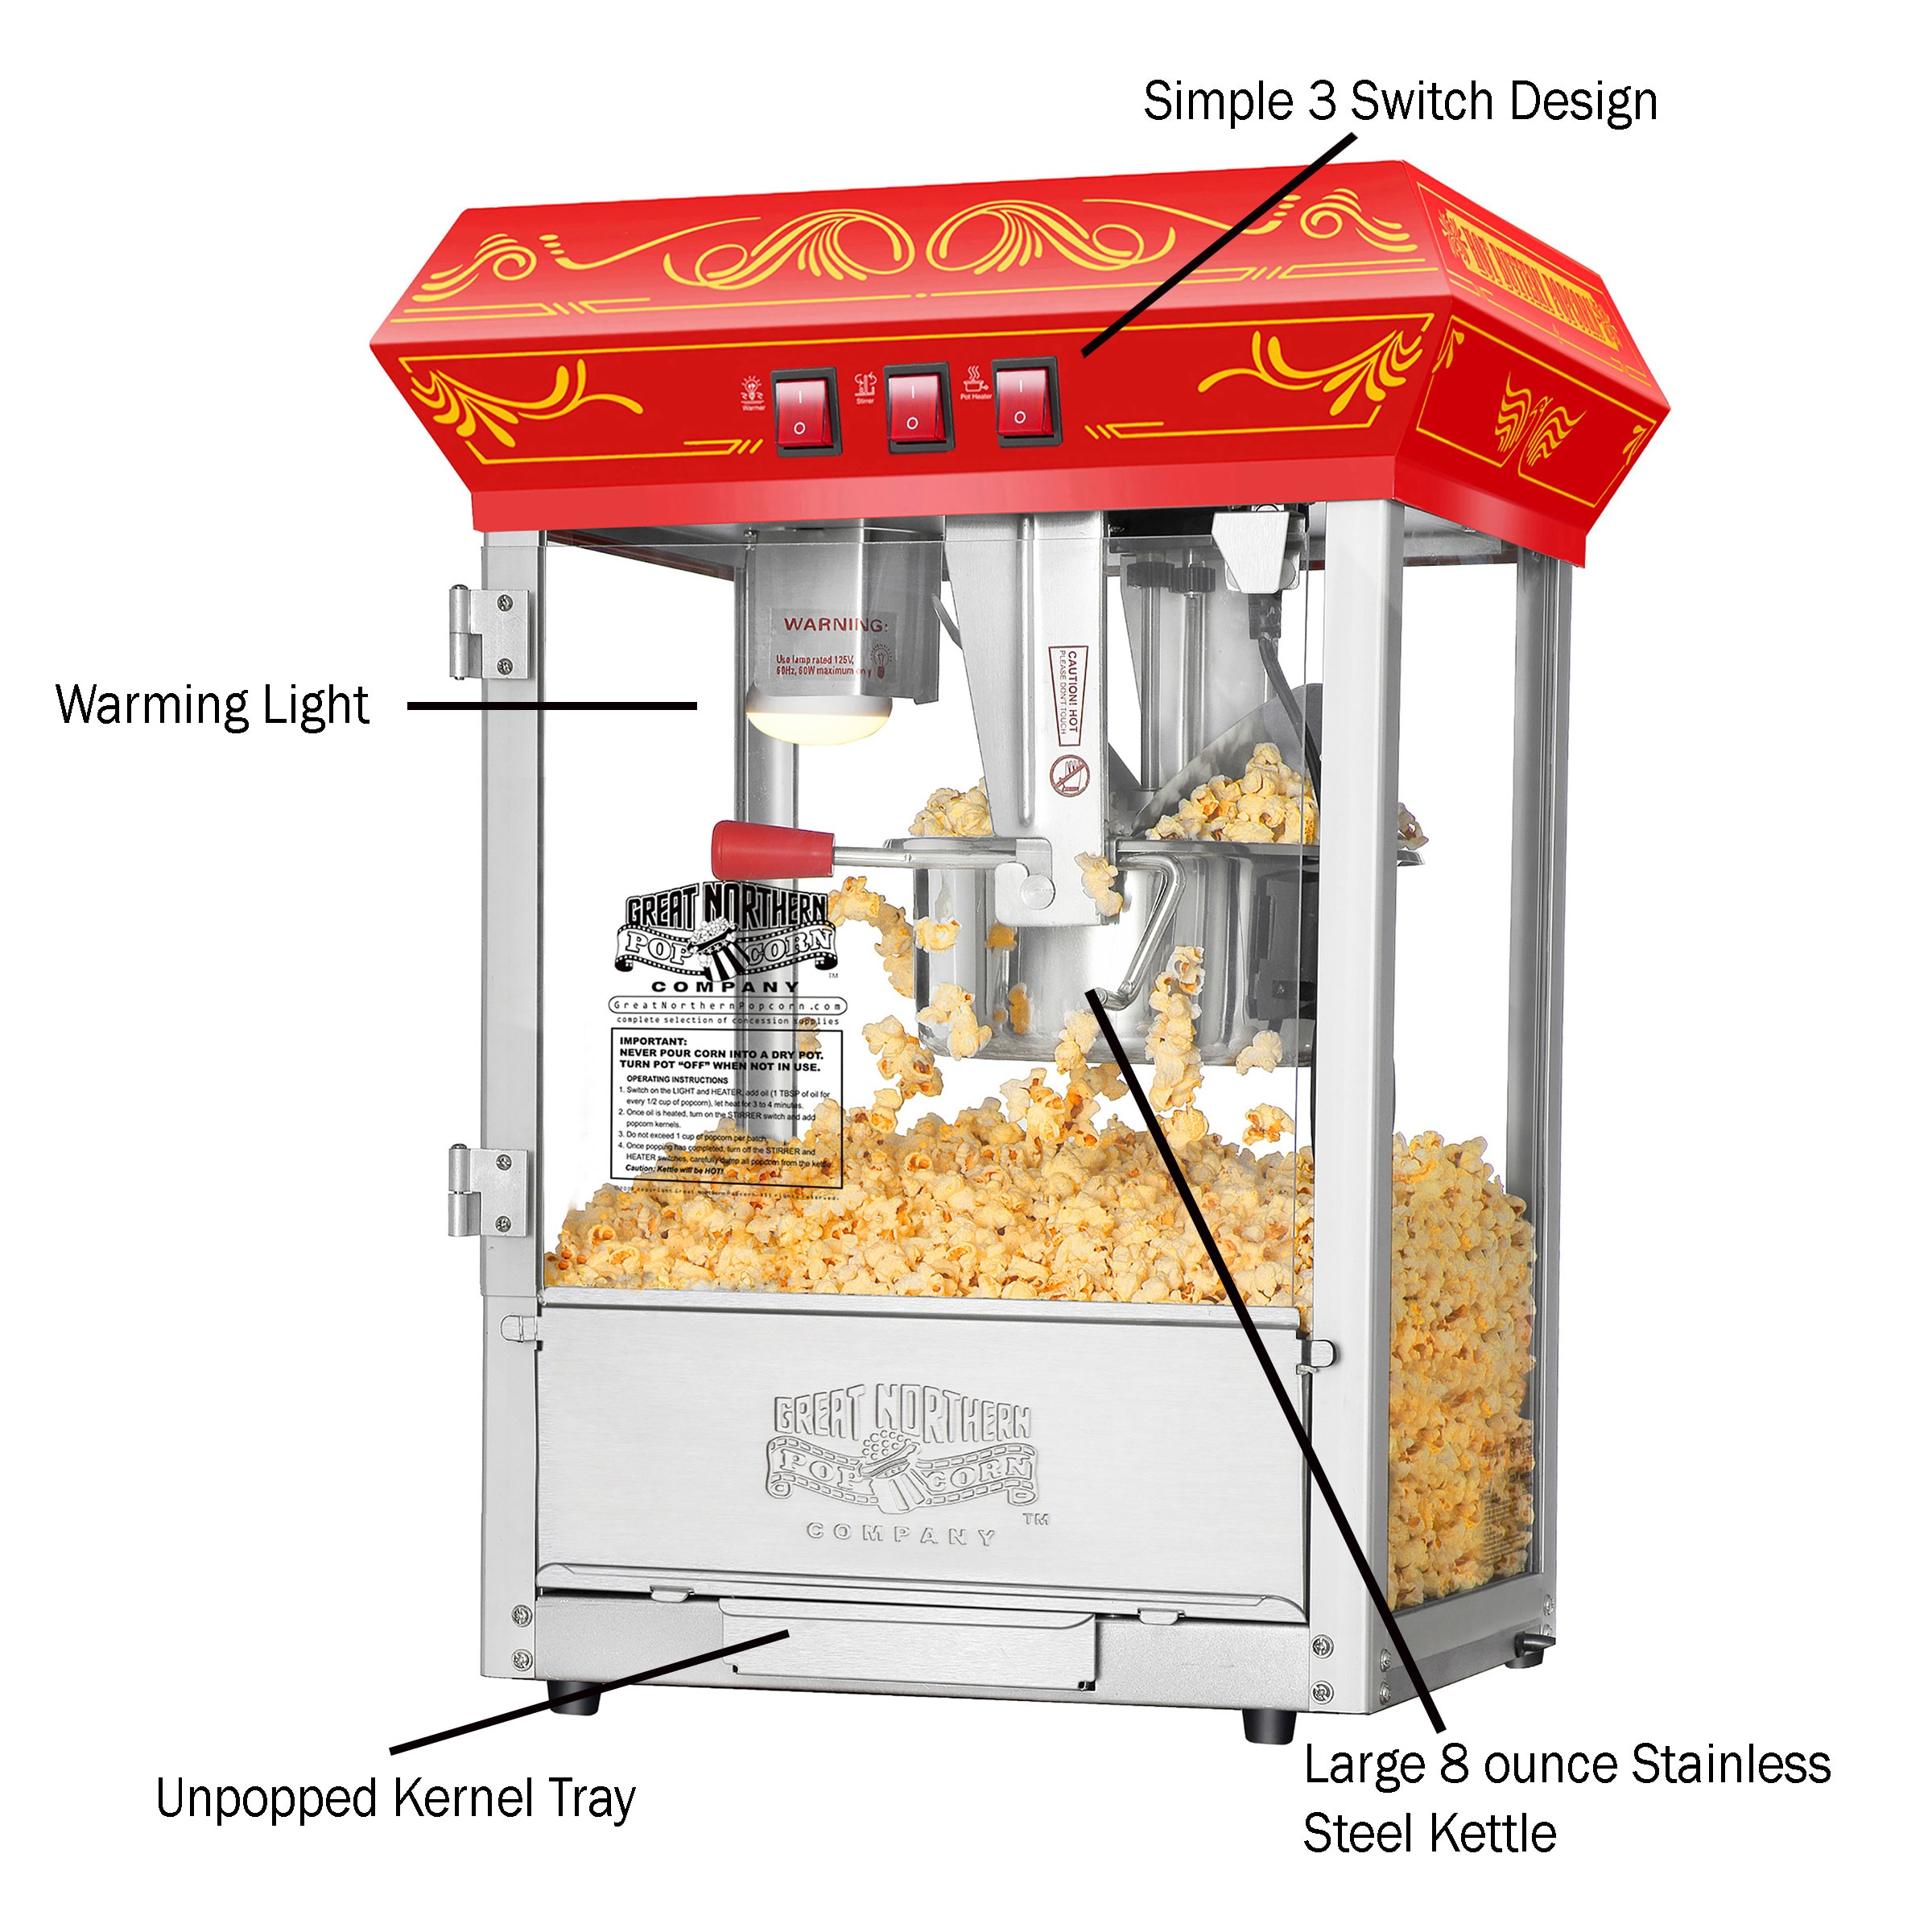 solacol Popcorn Oil for Popcorn Machine Hot Popcorn Popcorn Maker, Electric  Popcorn Maker, with Measuring Spoon, Quick Popcorn, Oil Free, Good for